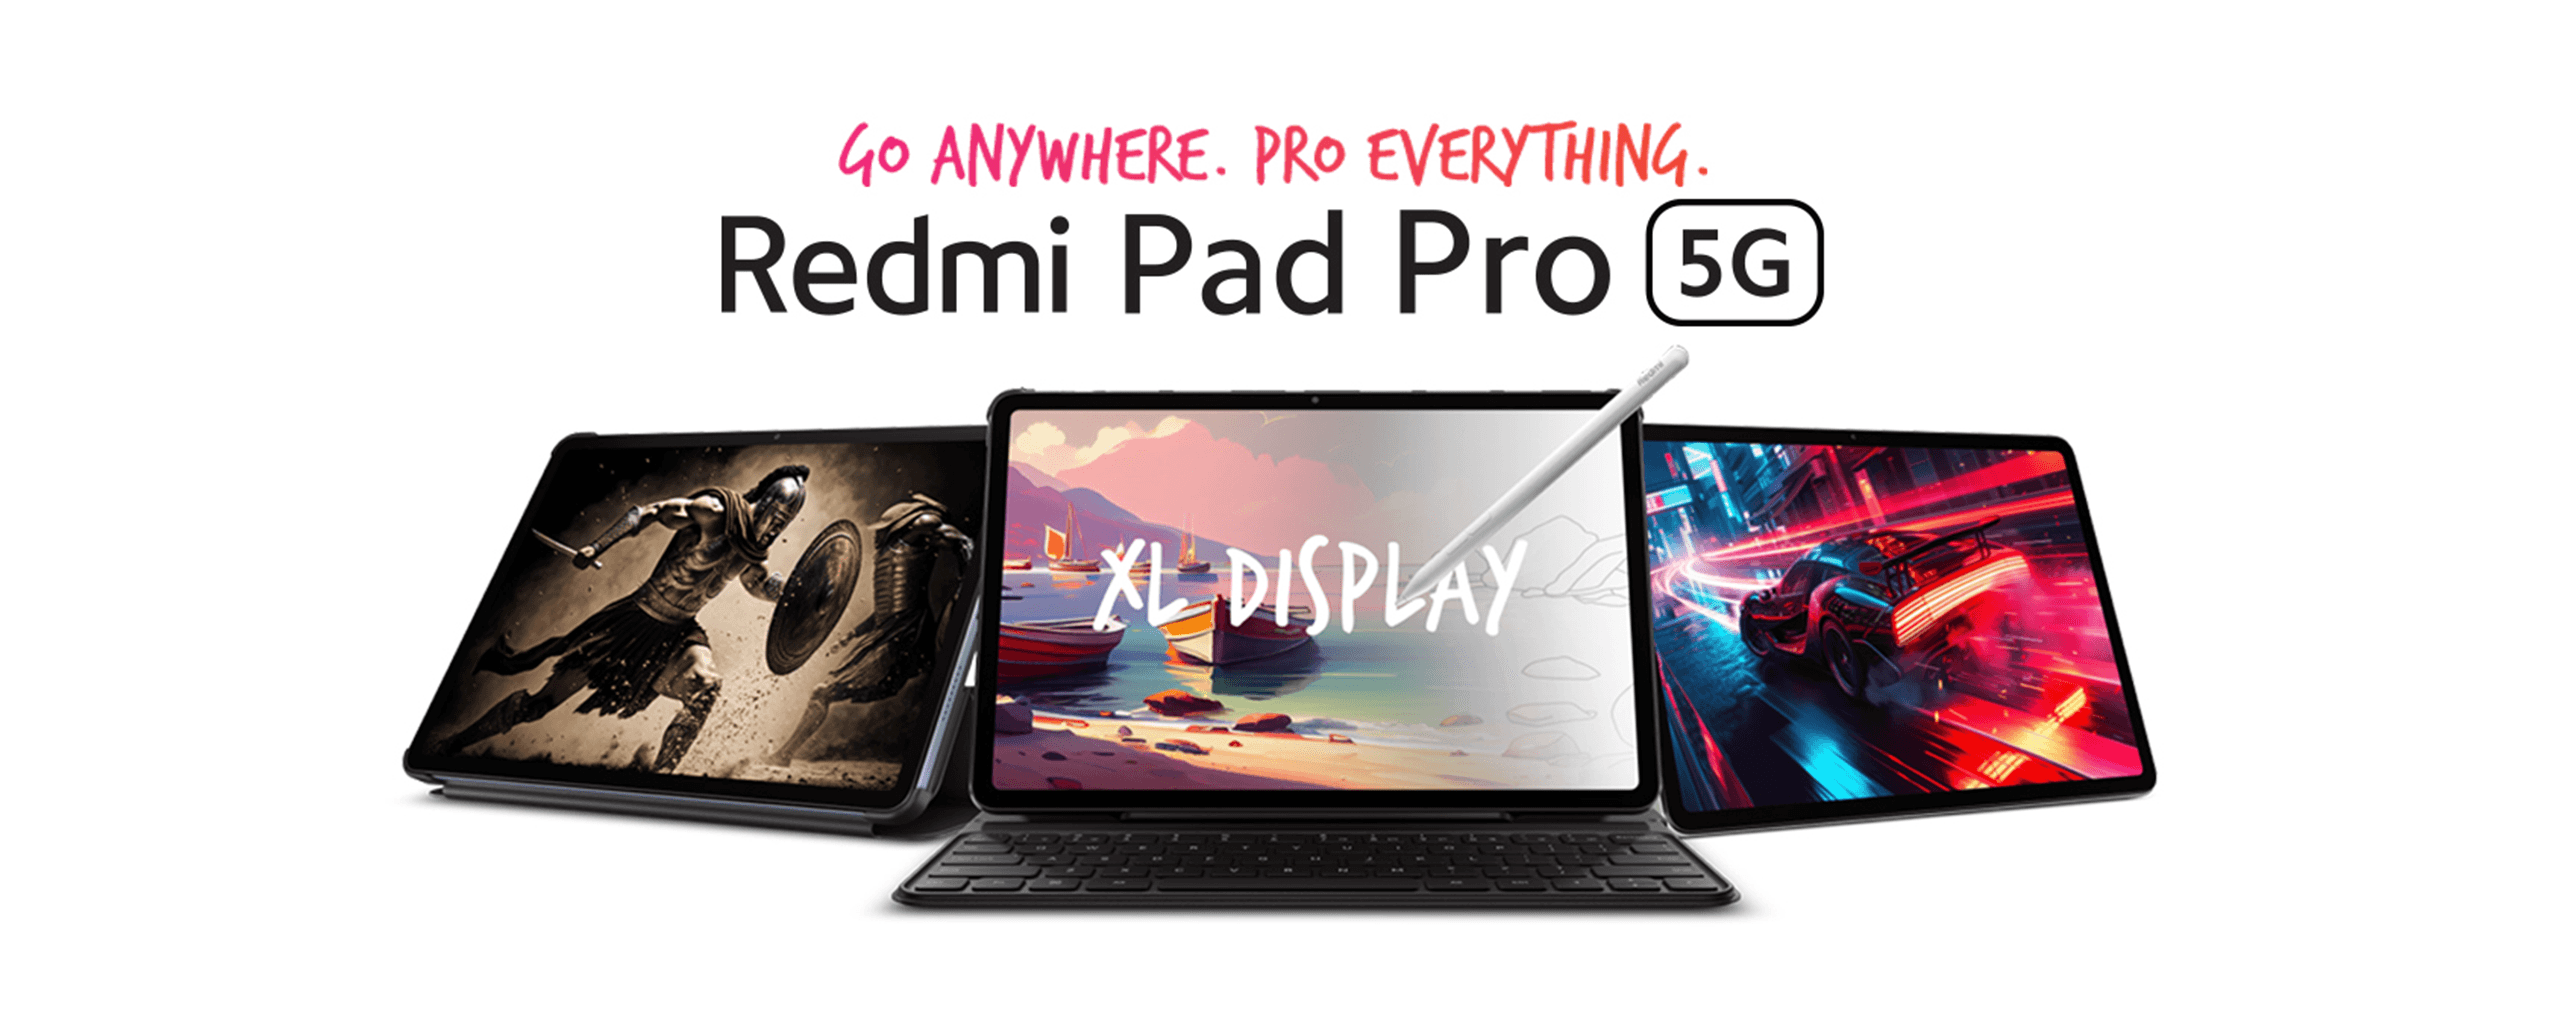 Redmi Pad Pro 5g